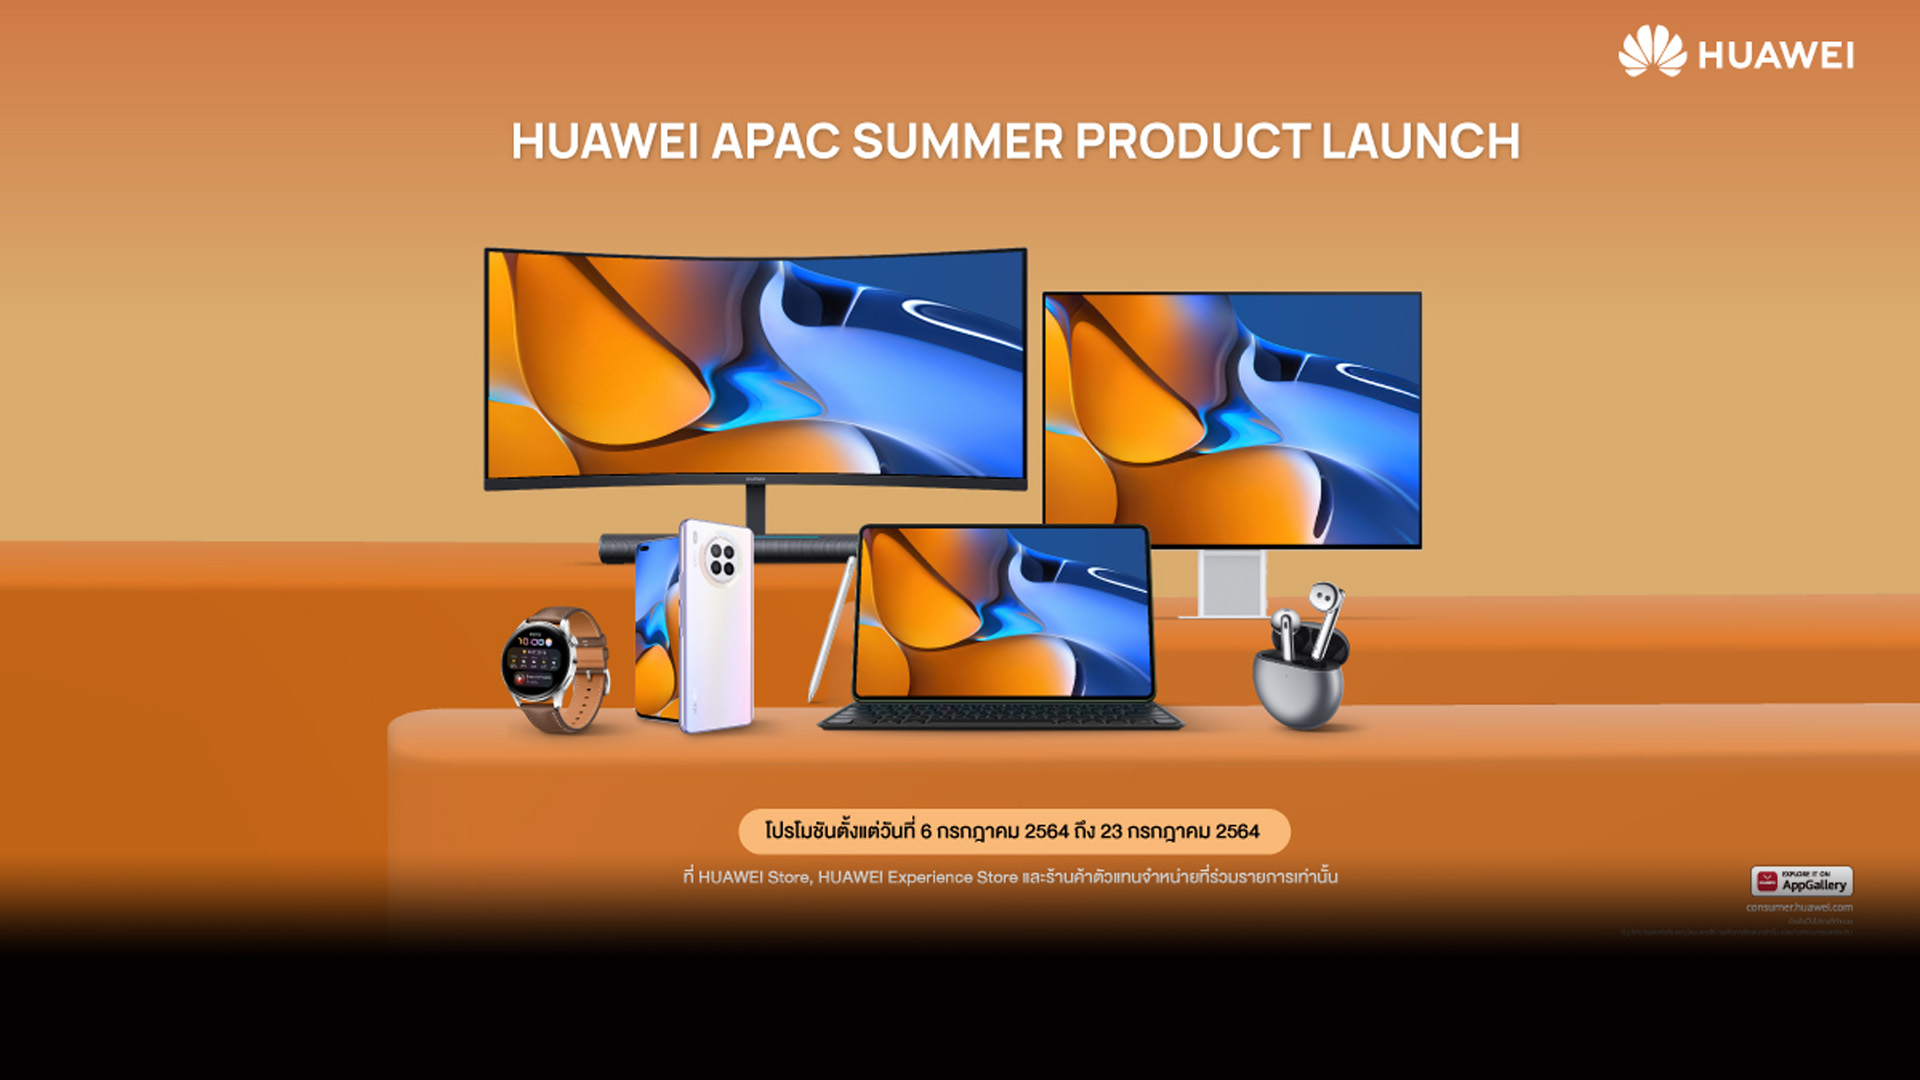 Huawei ยกทัพผลิตภัณฑ์หลากหลายกลุ่มเปิดตัว ในงาน HUAWEI APAC SUMMER PRODUCT LAUNCH พร้อมโปรฯ มากมาย